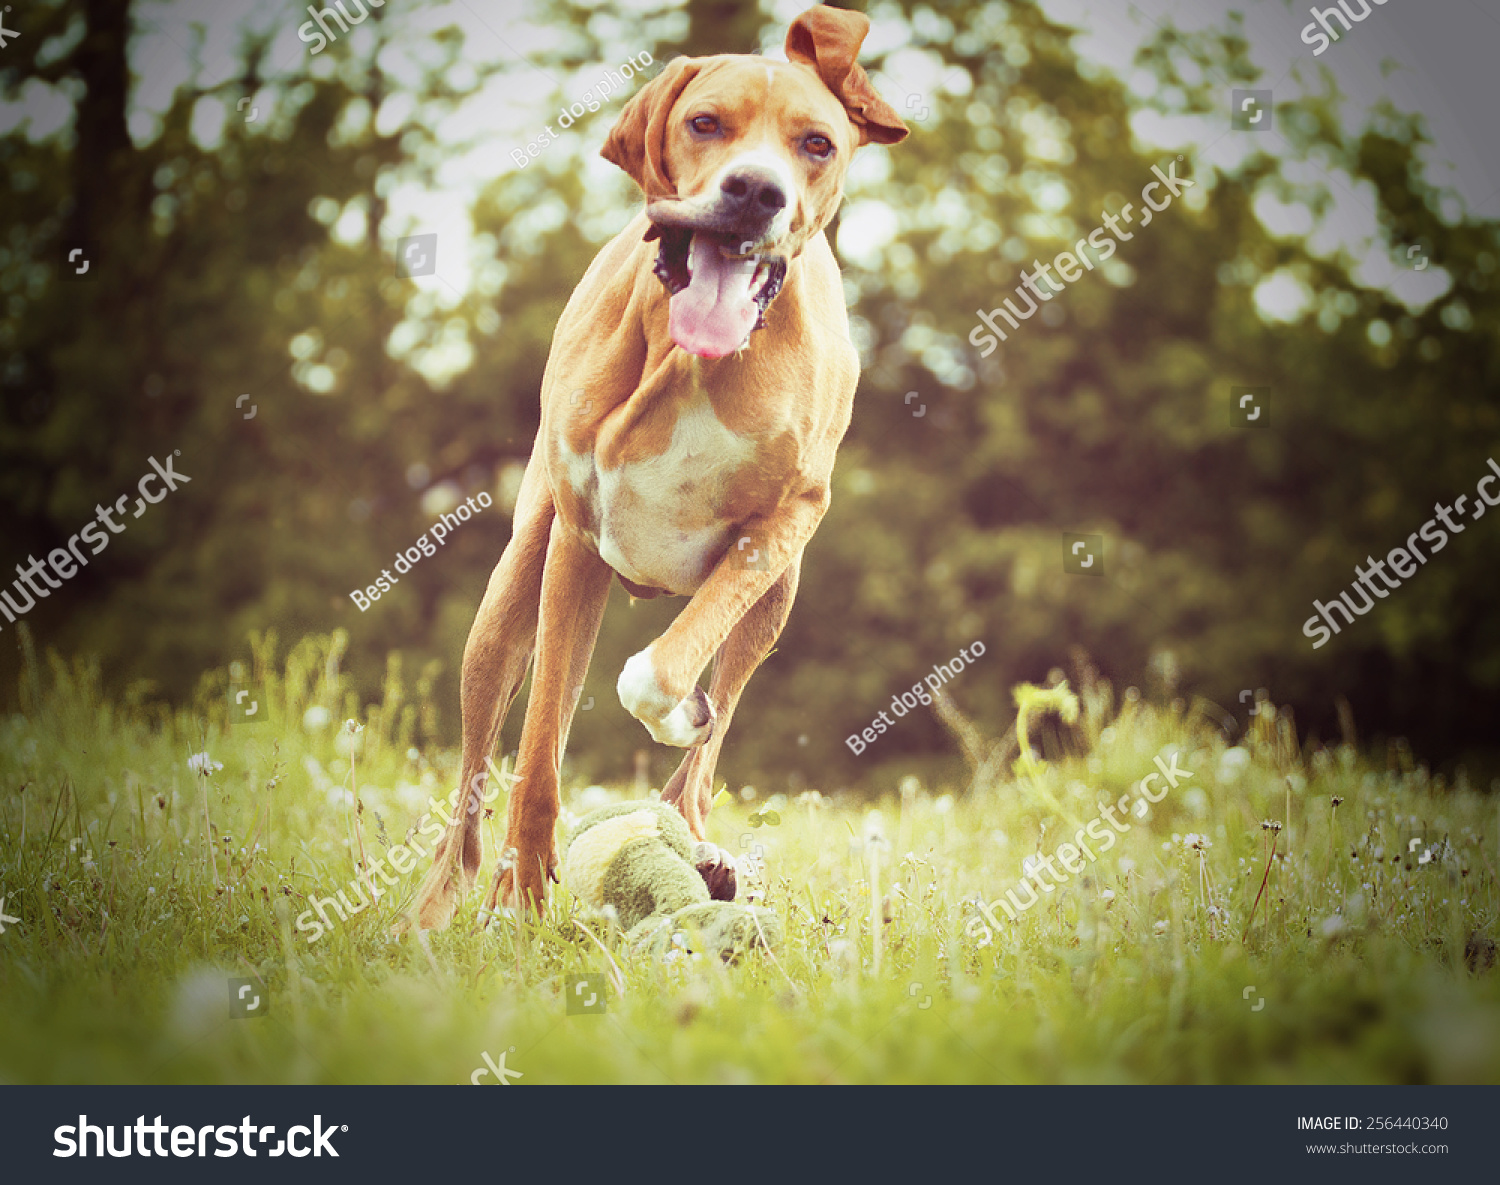 beautiful funny rhodesian ridgeback pointer magyar viszla puppdy dog hunting and running in autumn nature #256440340